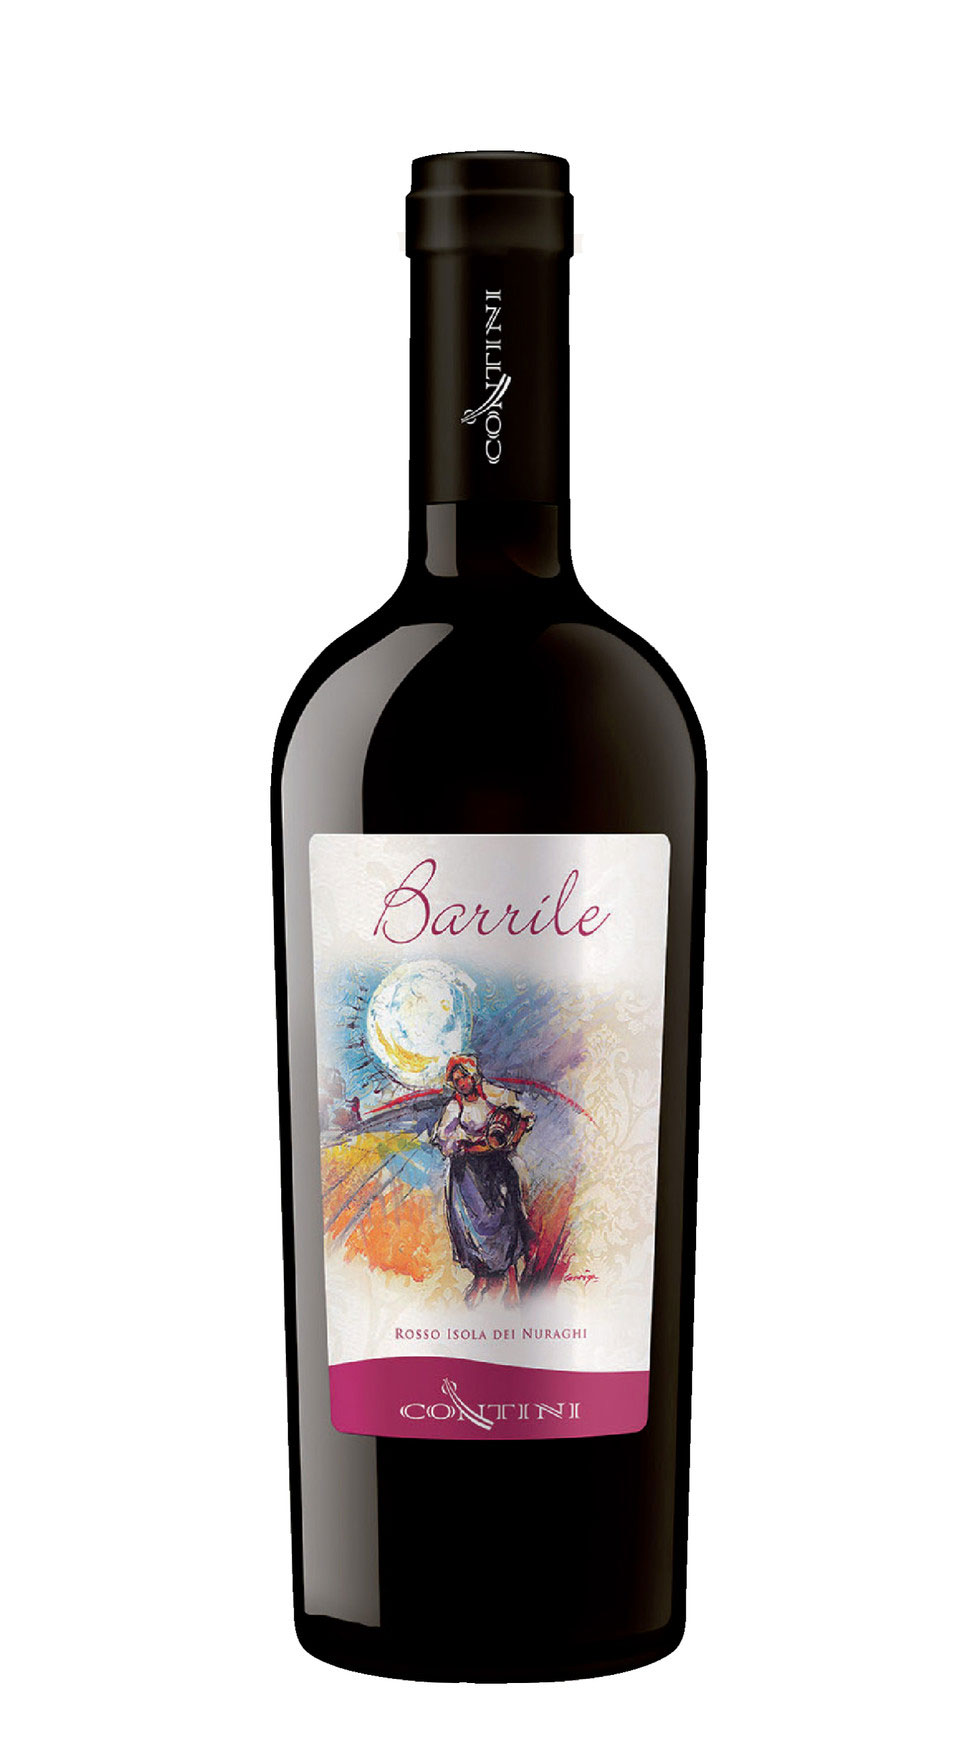 Contini - Barrile - Compania de Vinos Montenegro